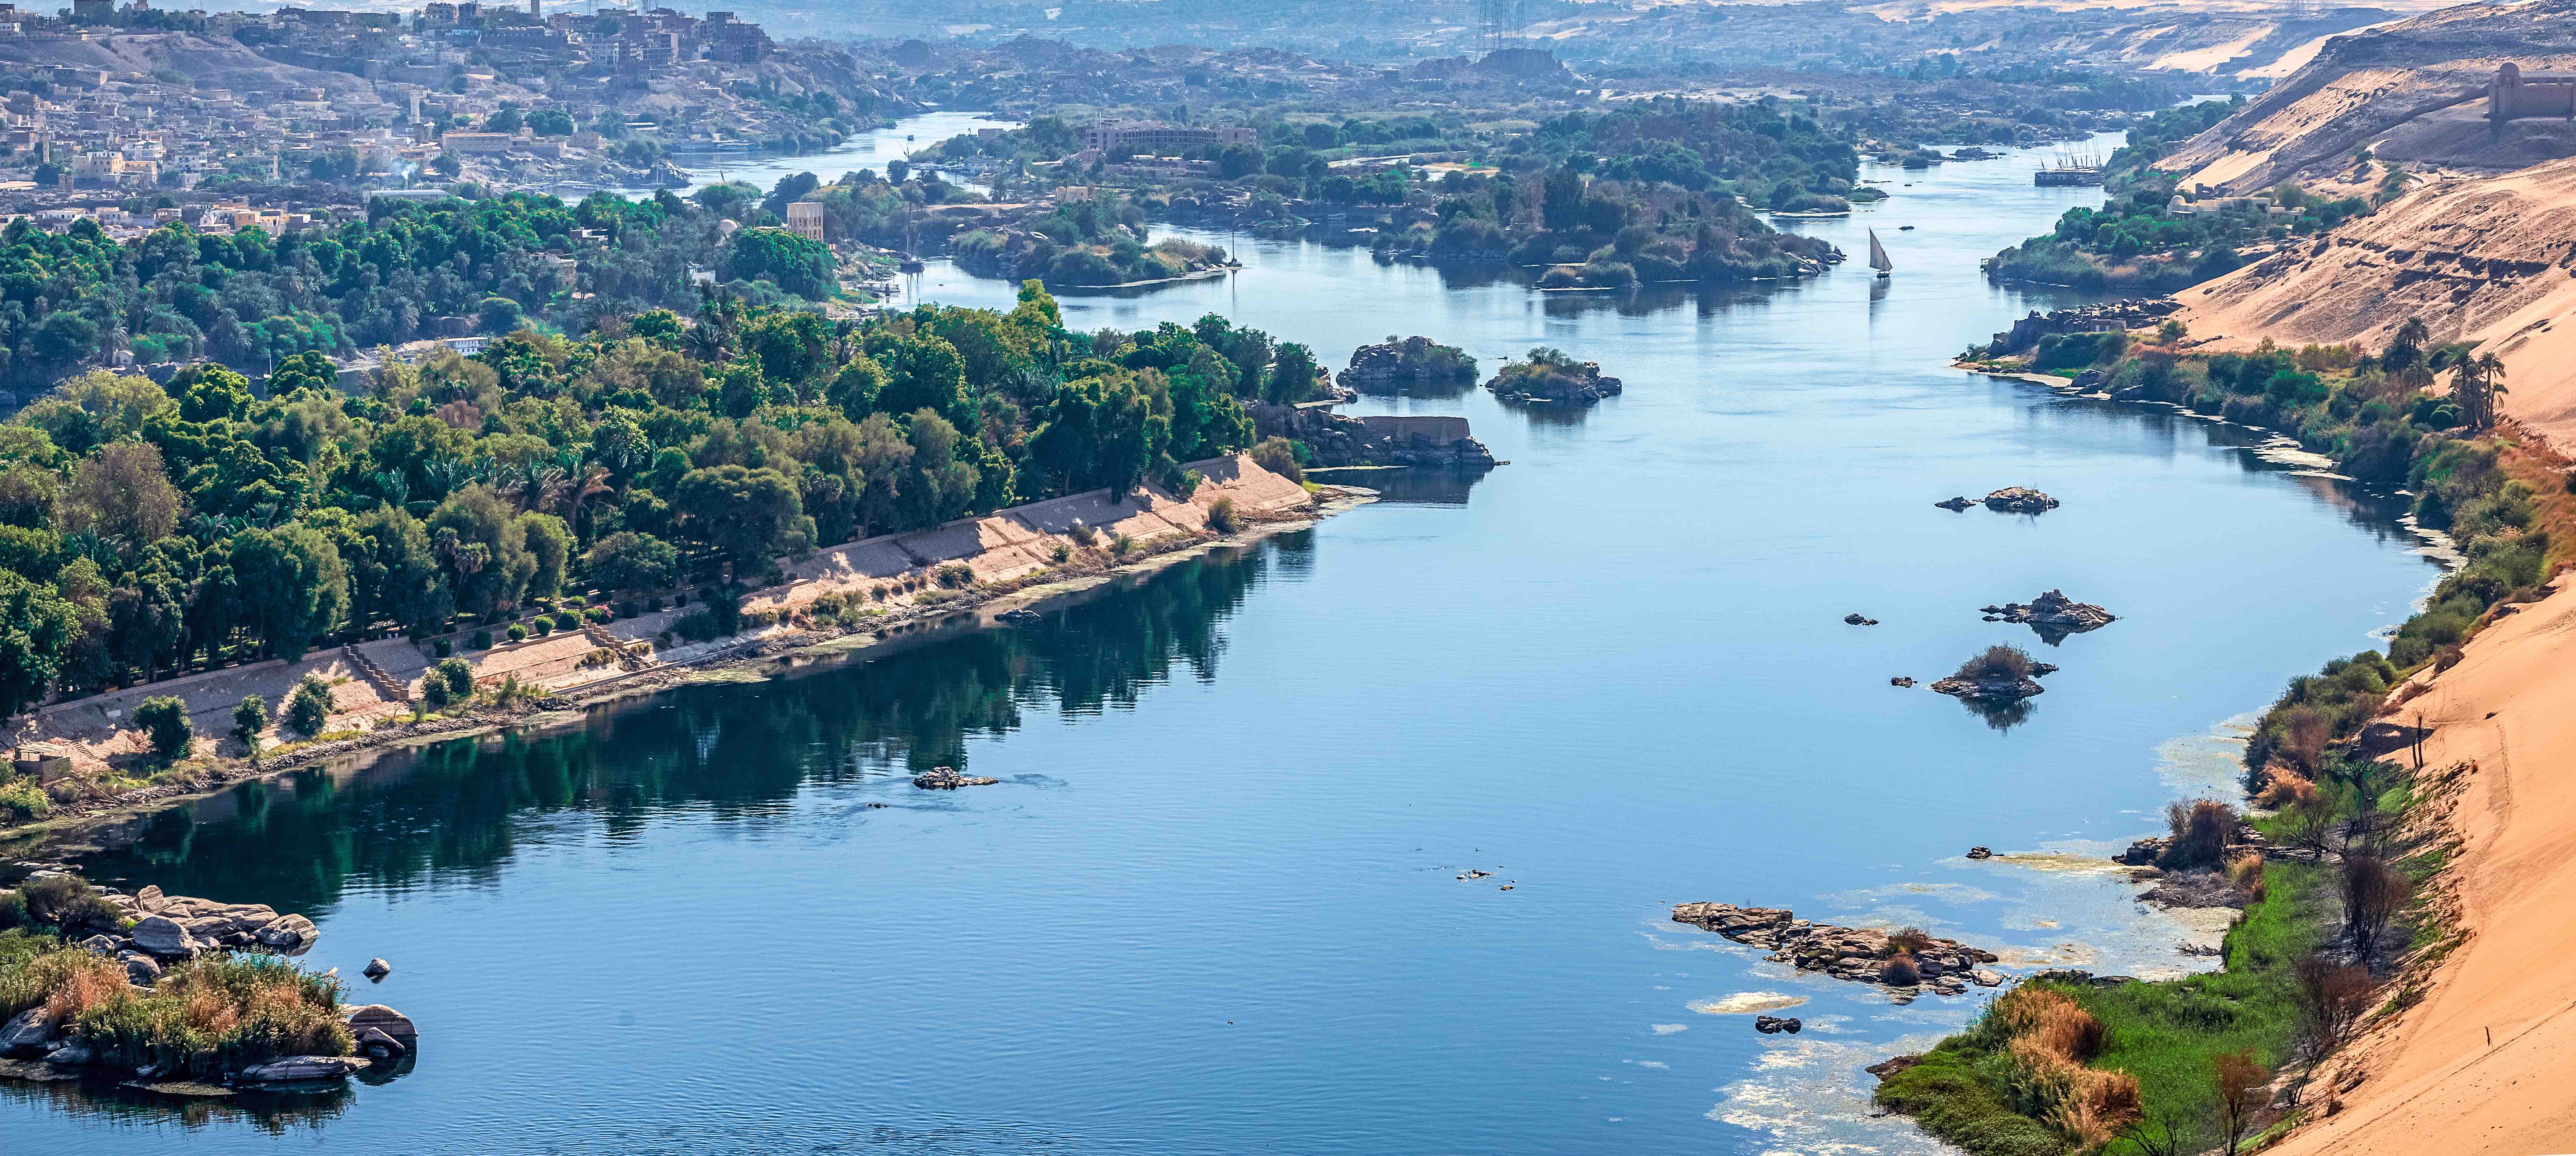 https://facts.net/wp-content/uploads/2021/01/Nile-river.jpg